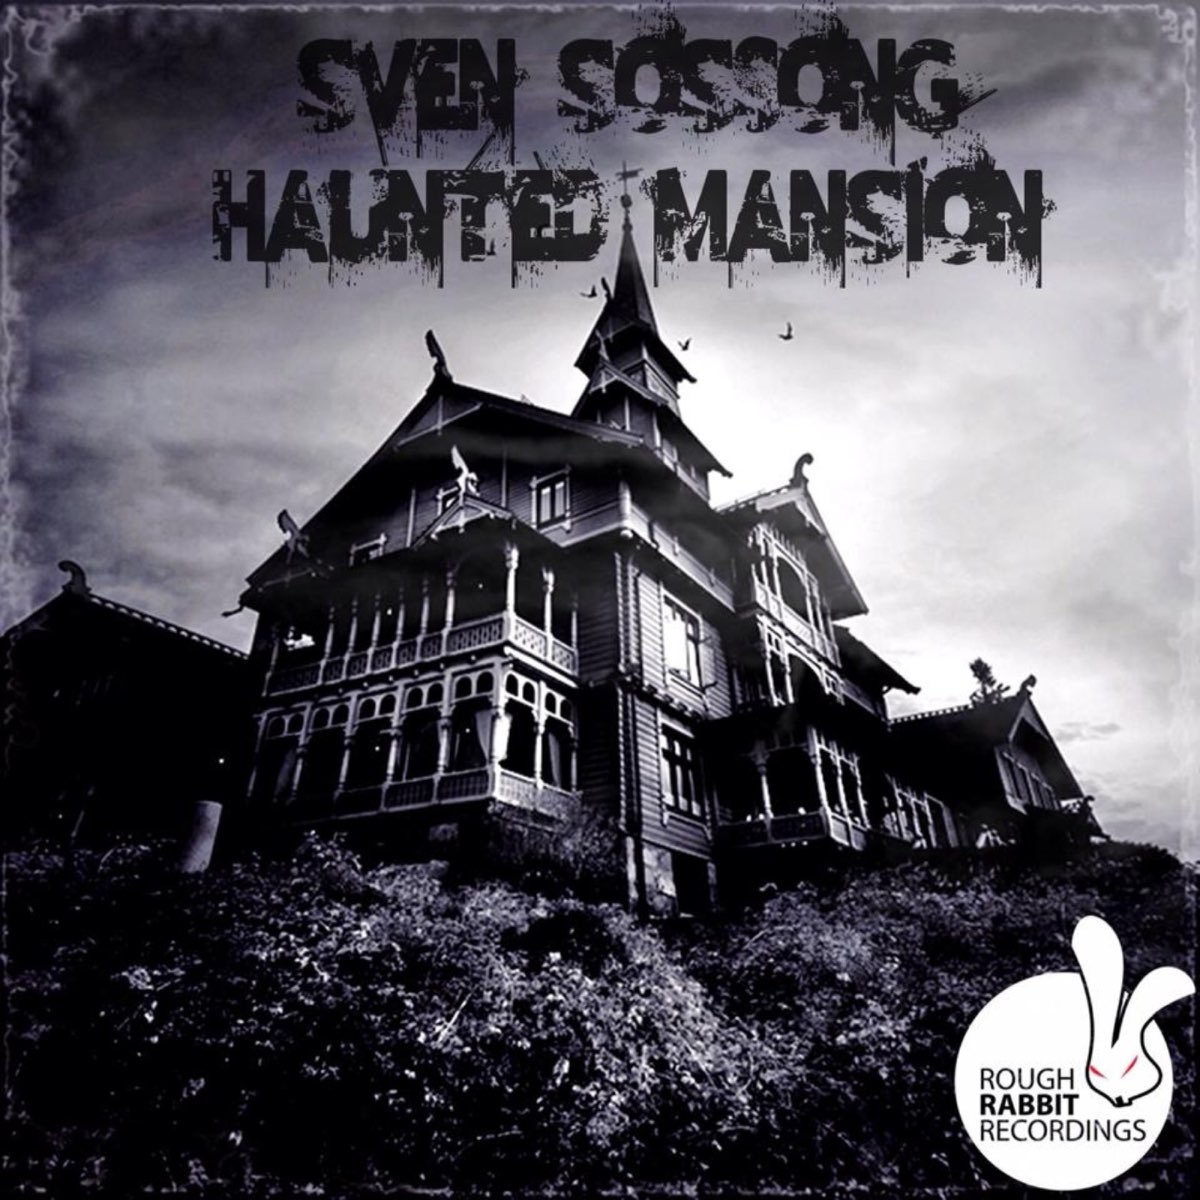 Menu Haunted album. Haunted Russian Songs. Haunted mansion 2